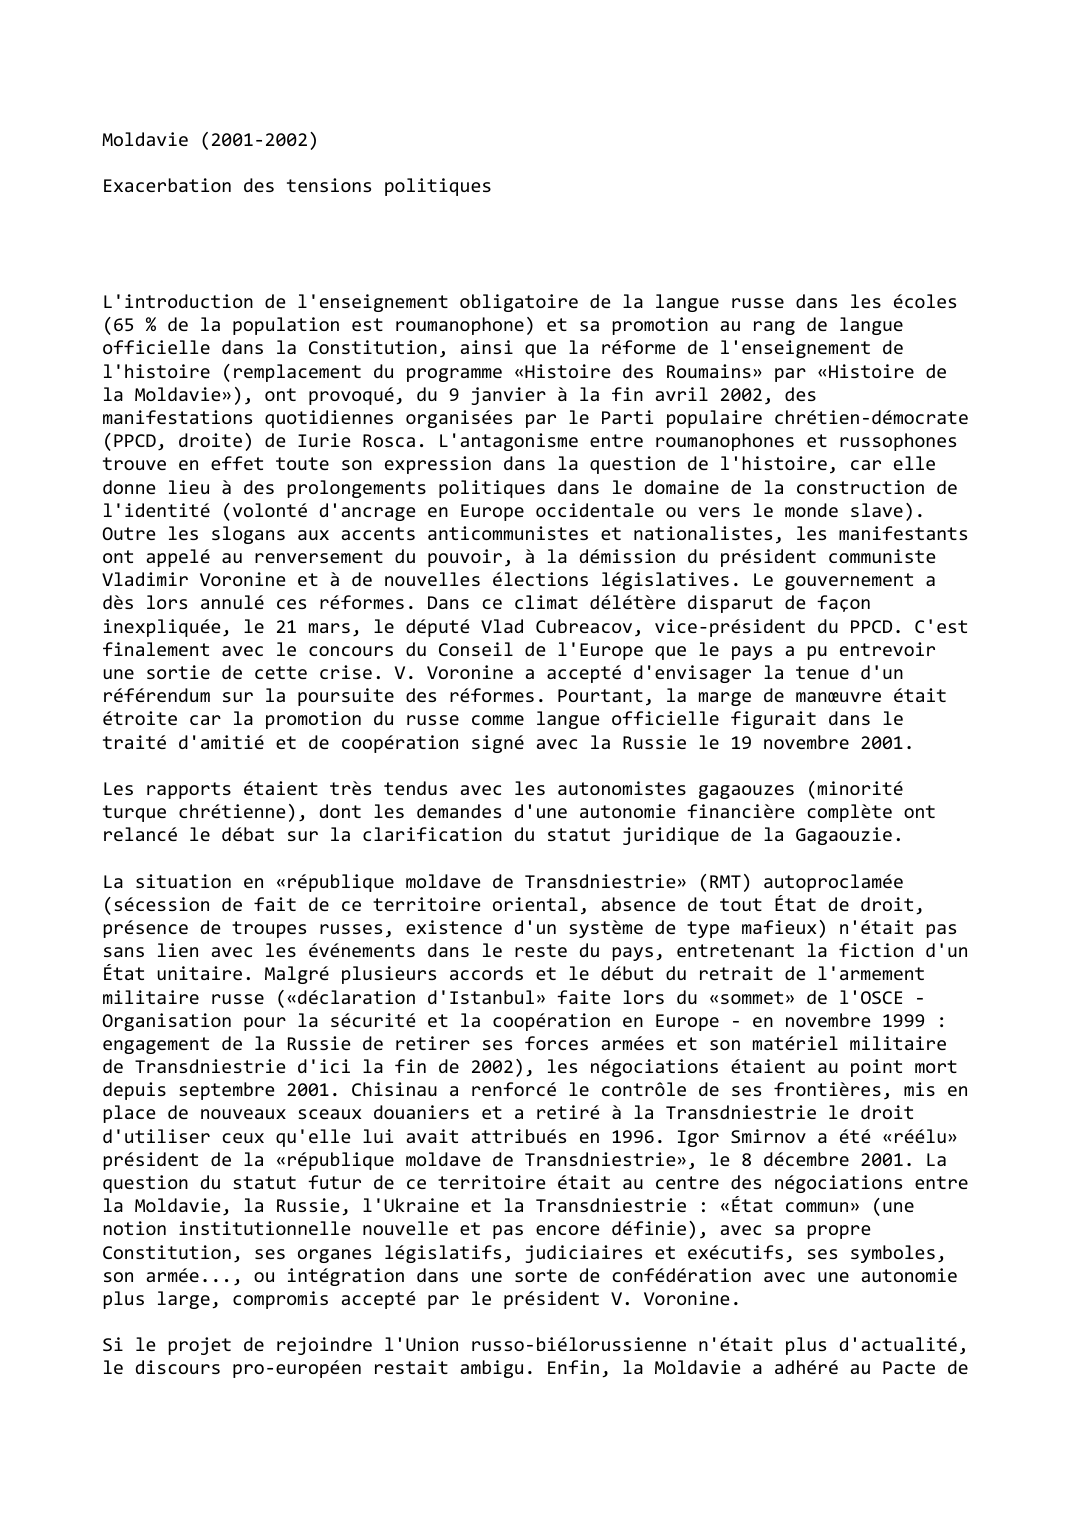 Prévisualisation du document Moldavie (2001-2002)